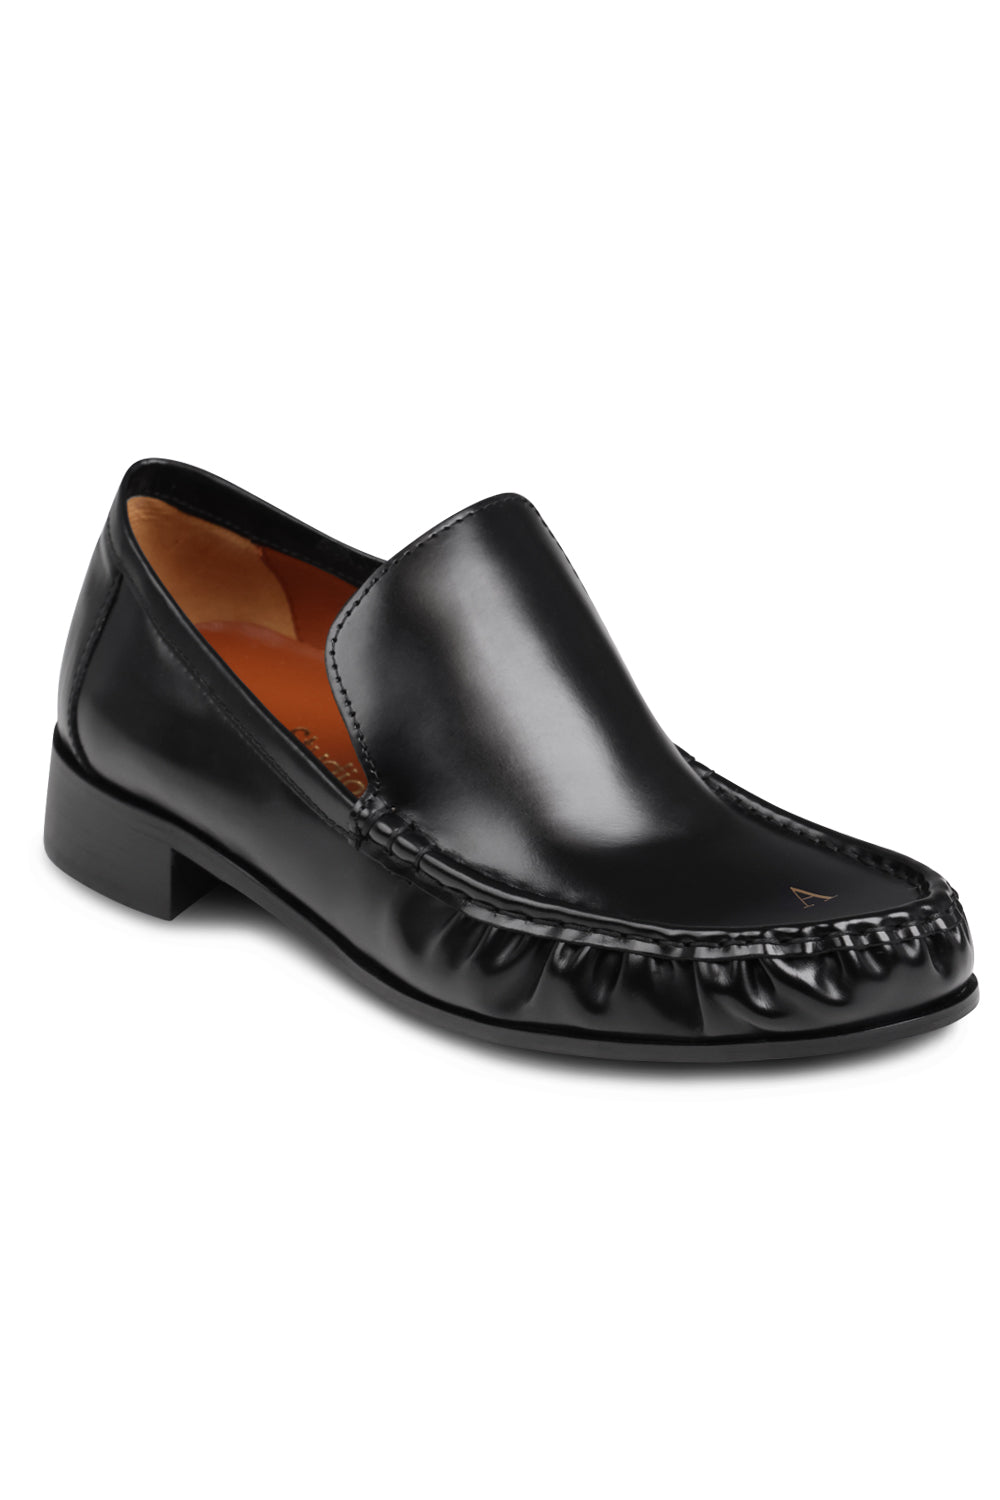 ACNE STUDIOS SHOES Babi Leather Loafer | Black